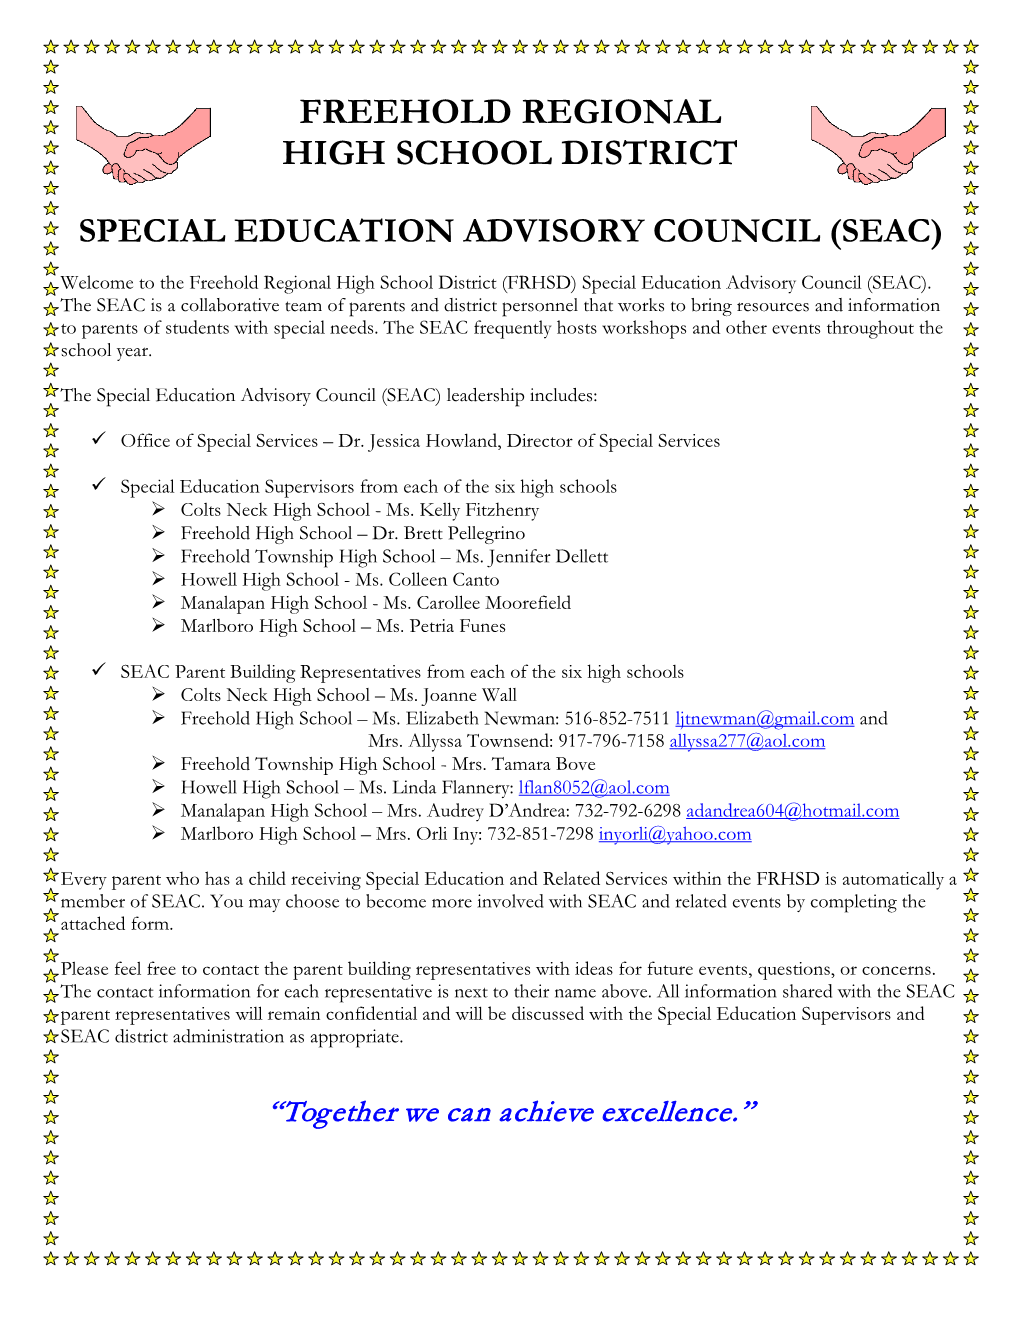 Special Education Advisory Council (Seac)